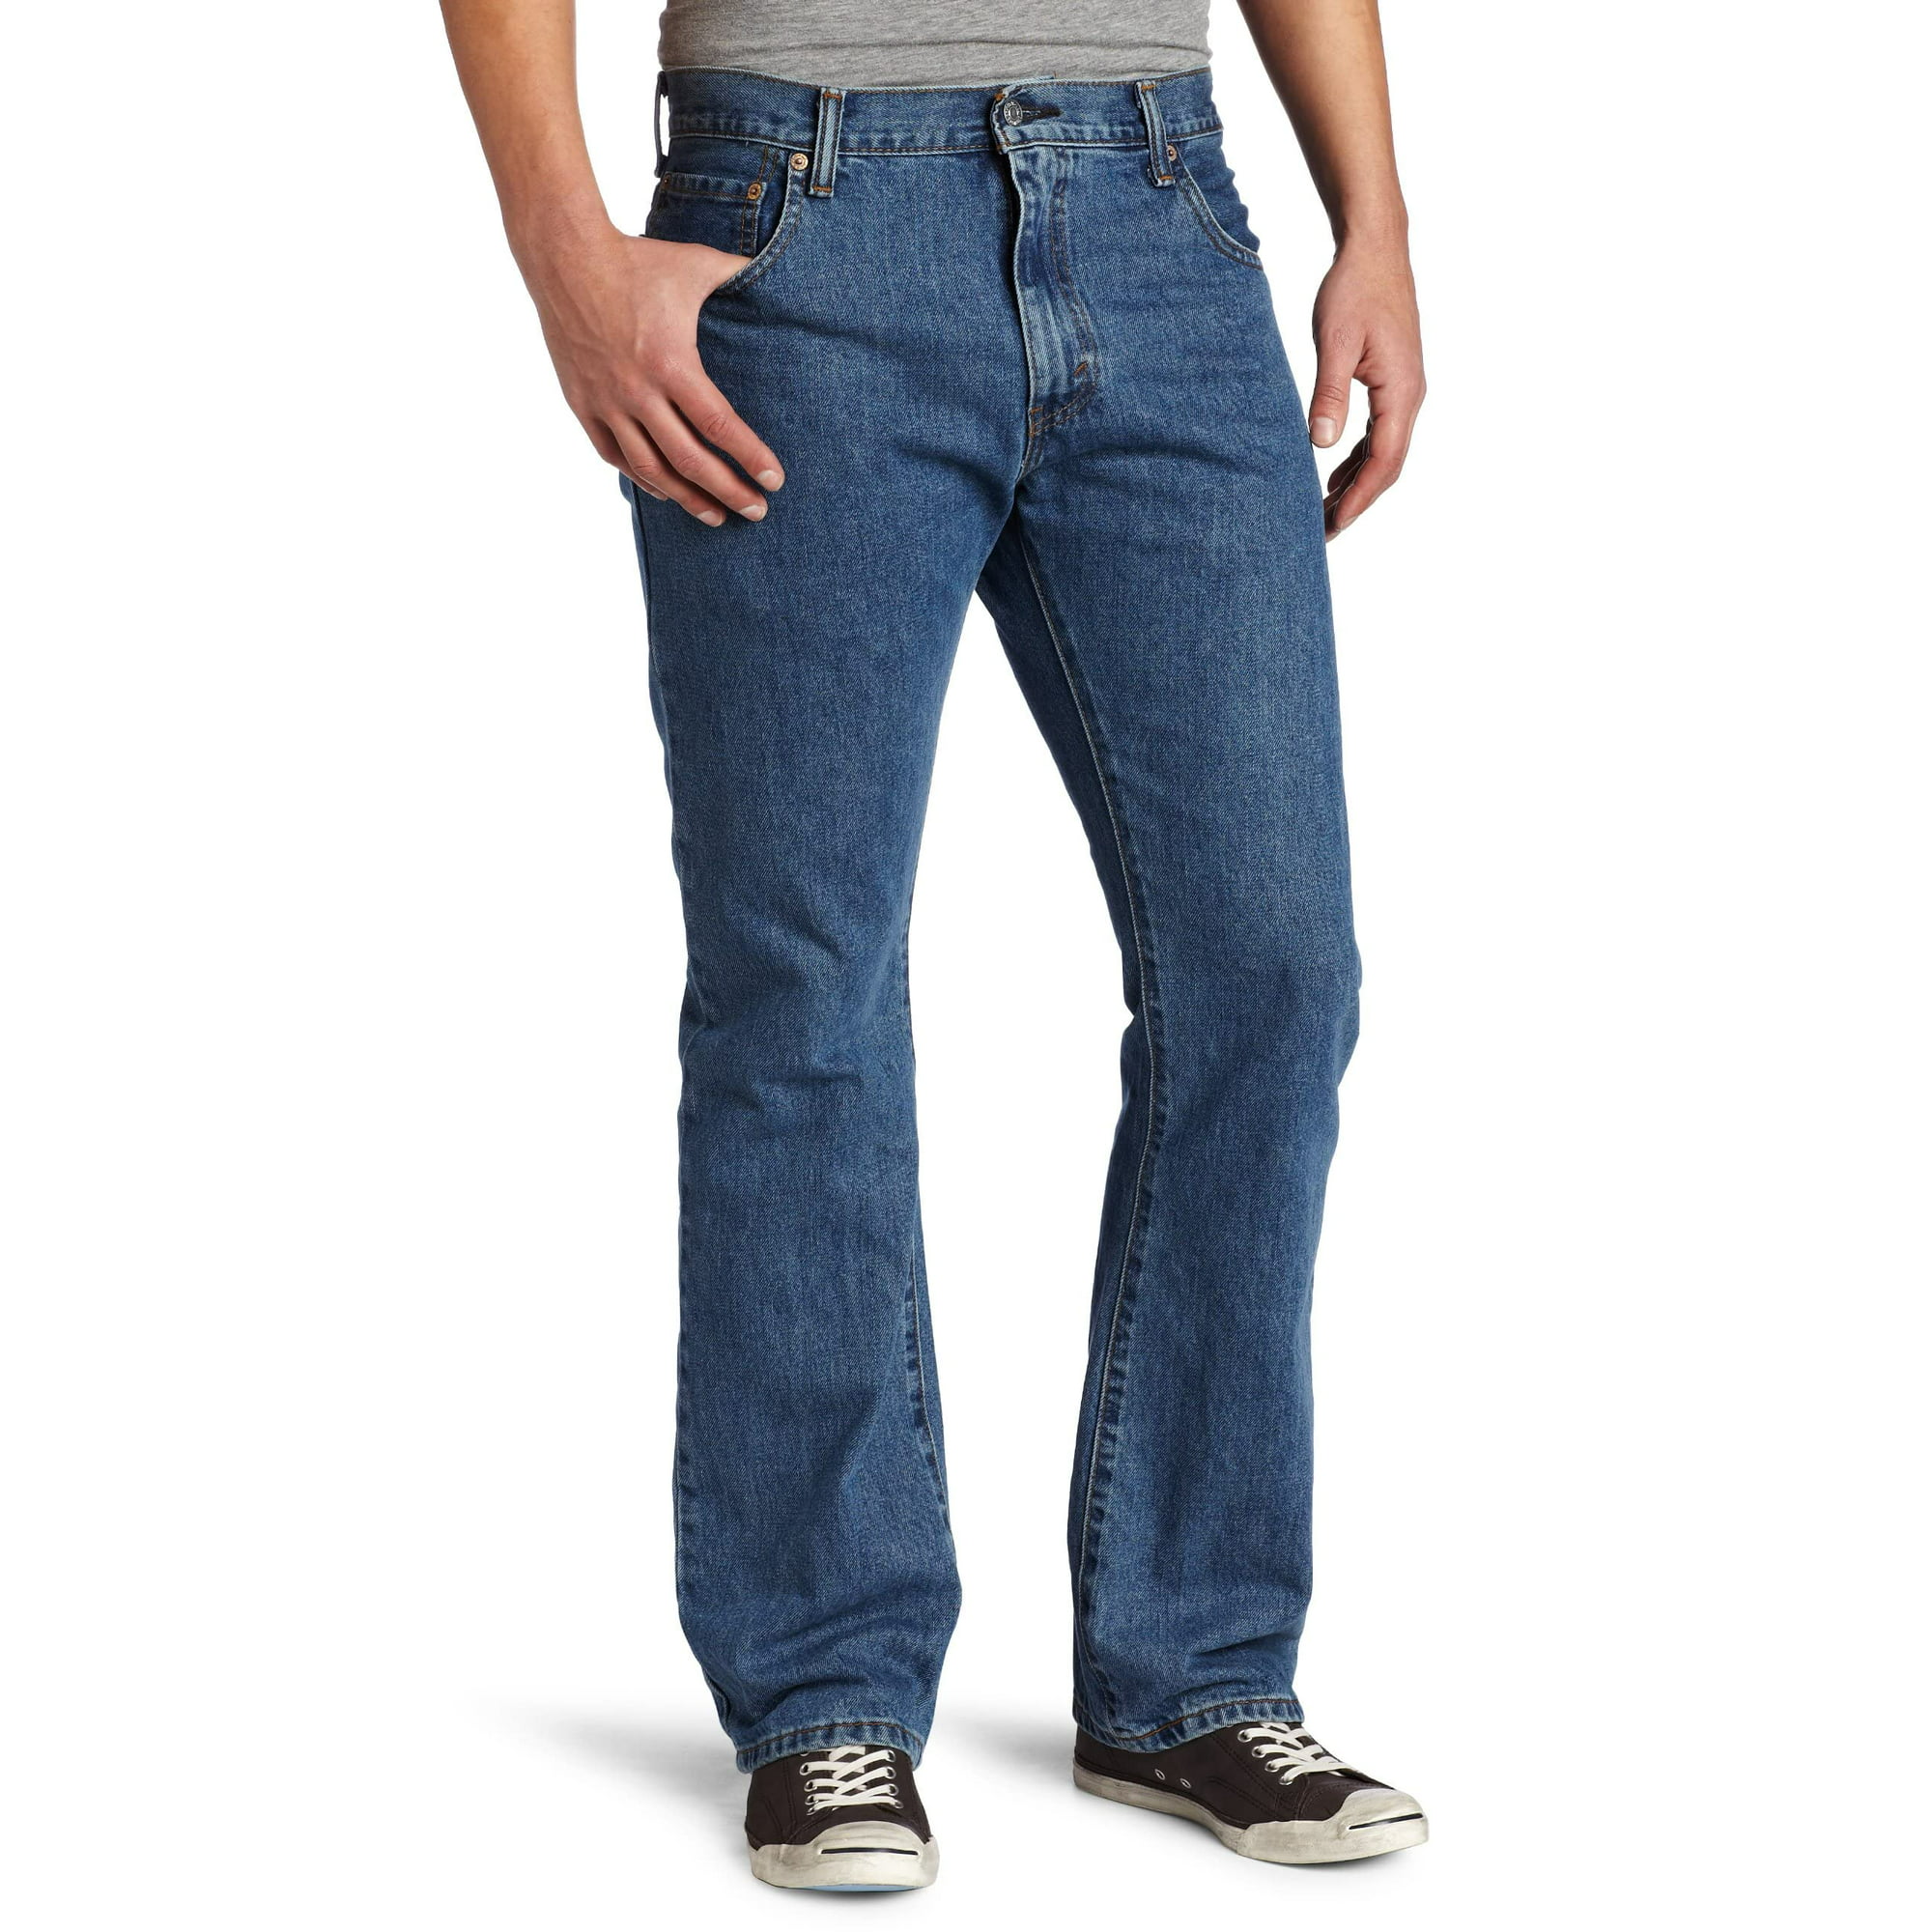 Levi's Men's 517 Boot Cut Jean, Medium Stonewash, 33x34 | Walmart Canada